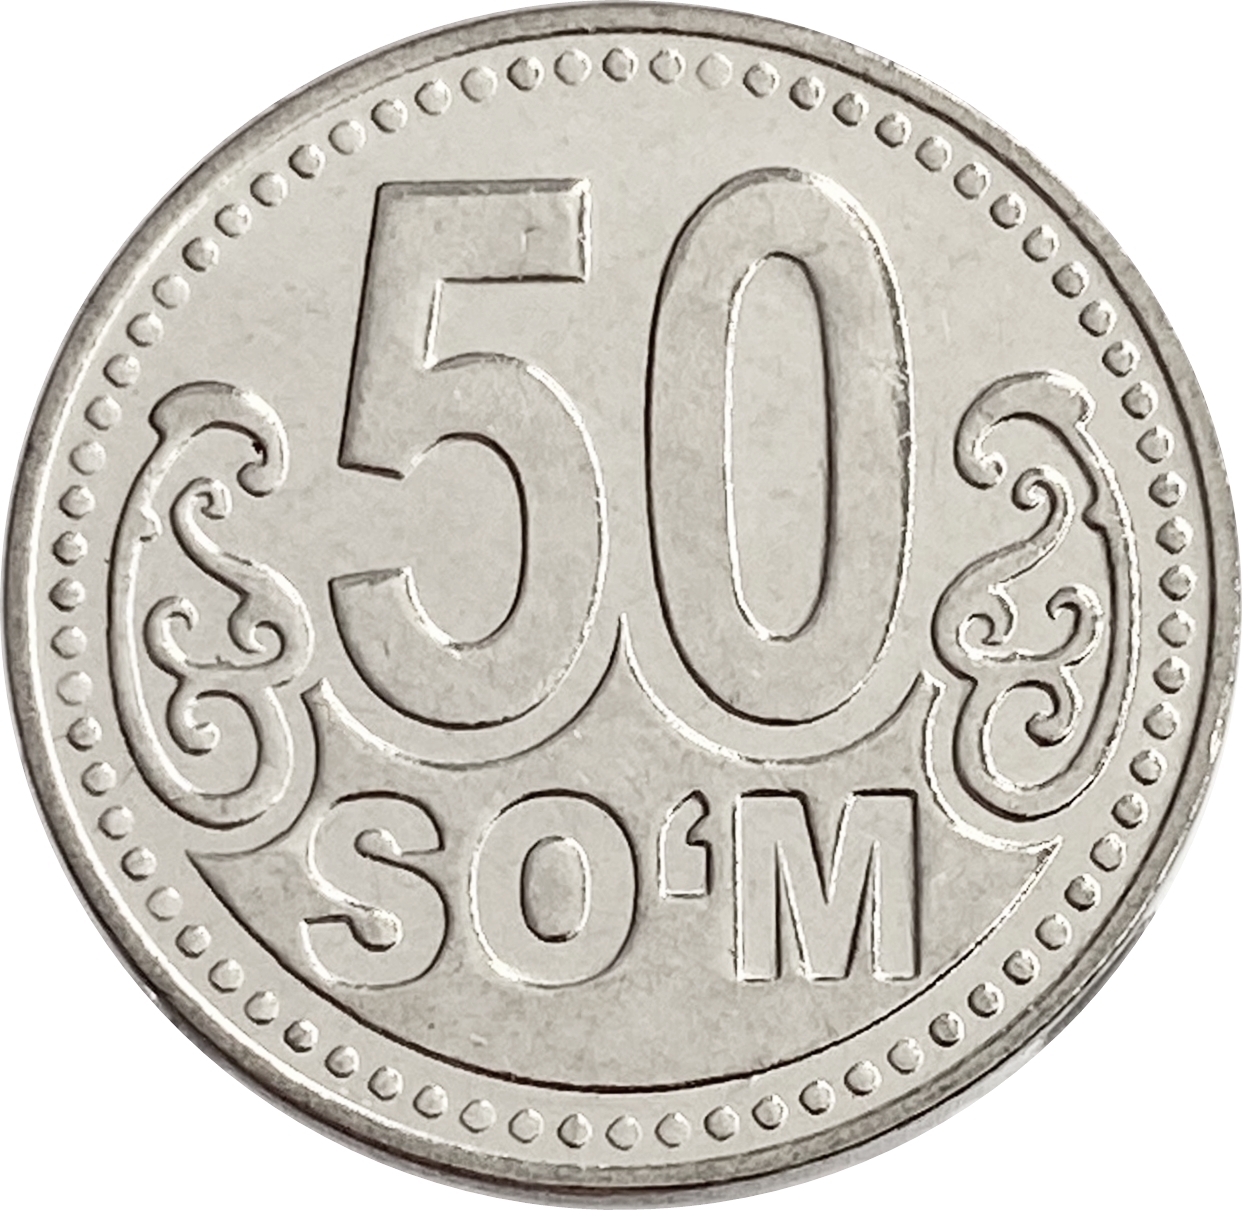 Сум 11. Монета 50 сум. Монета 50 тийин 1994 года Узбекистан. Монета 5 сум. Монеты Узбекистана 2018 год.